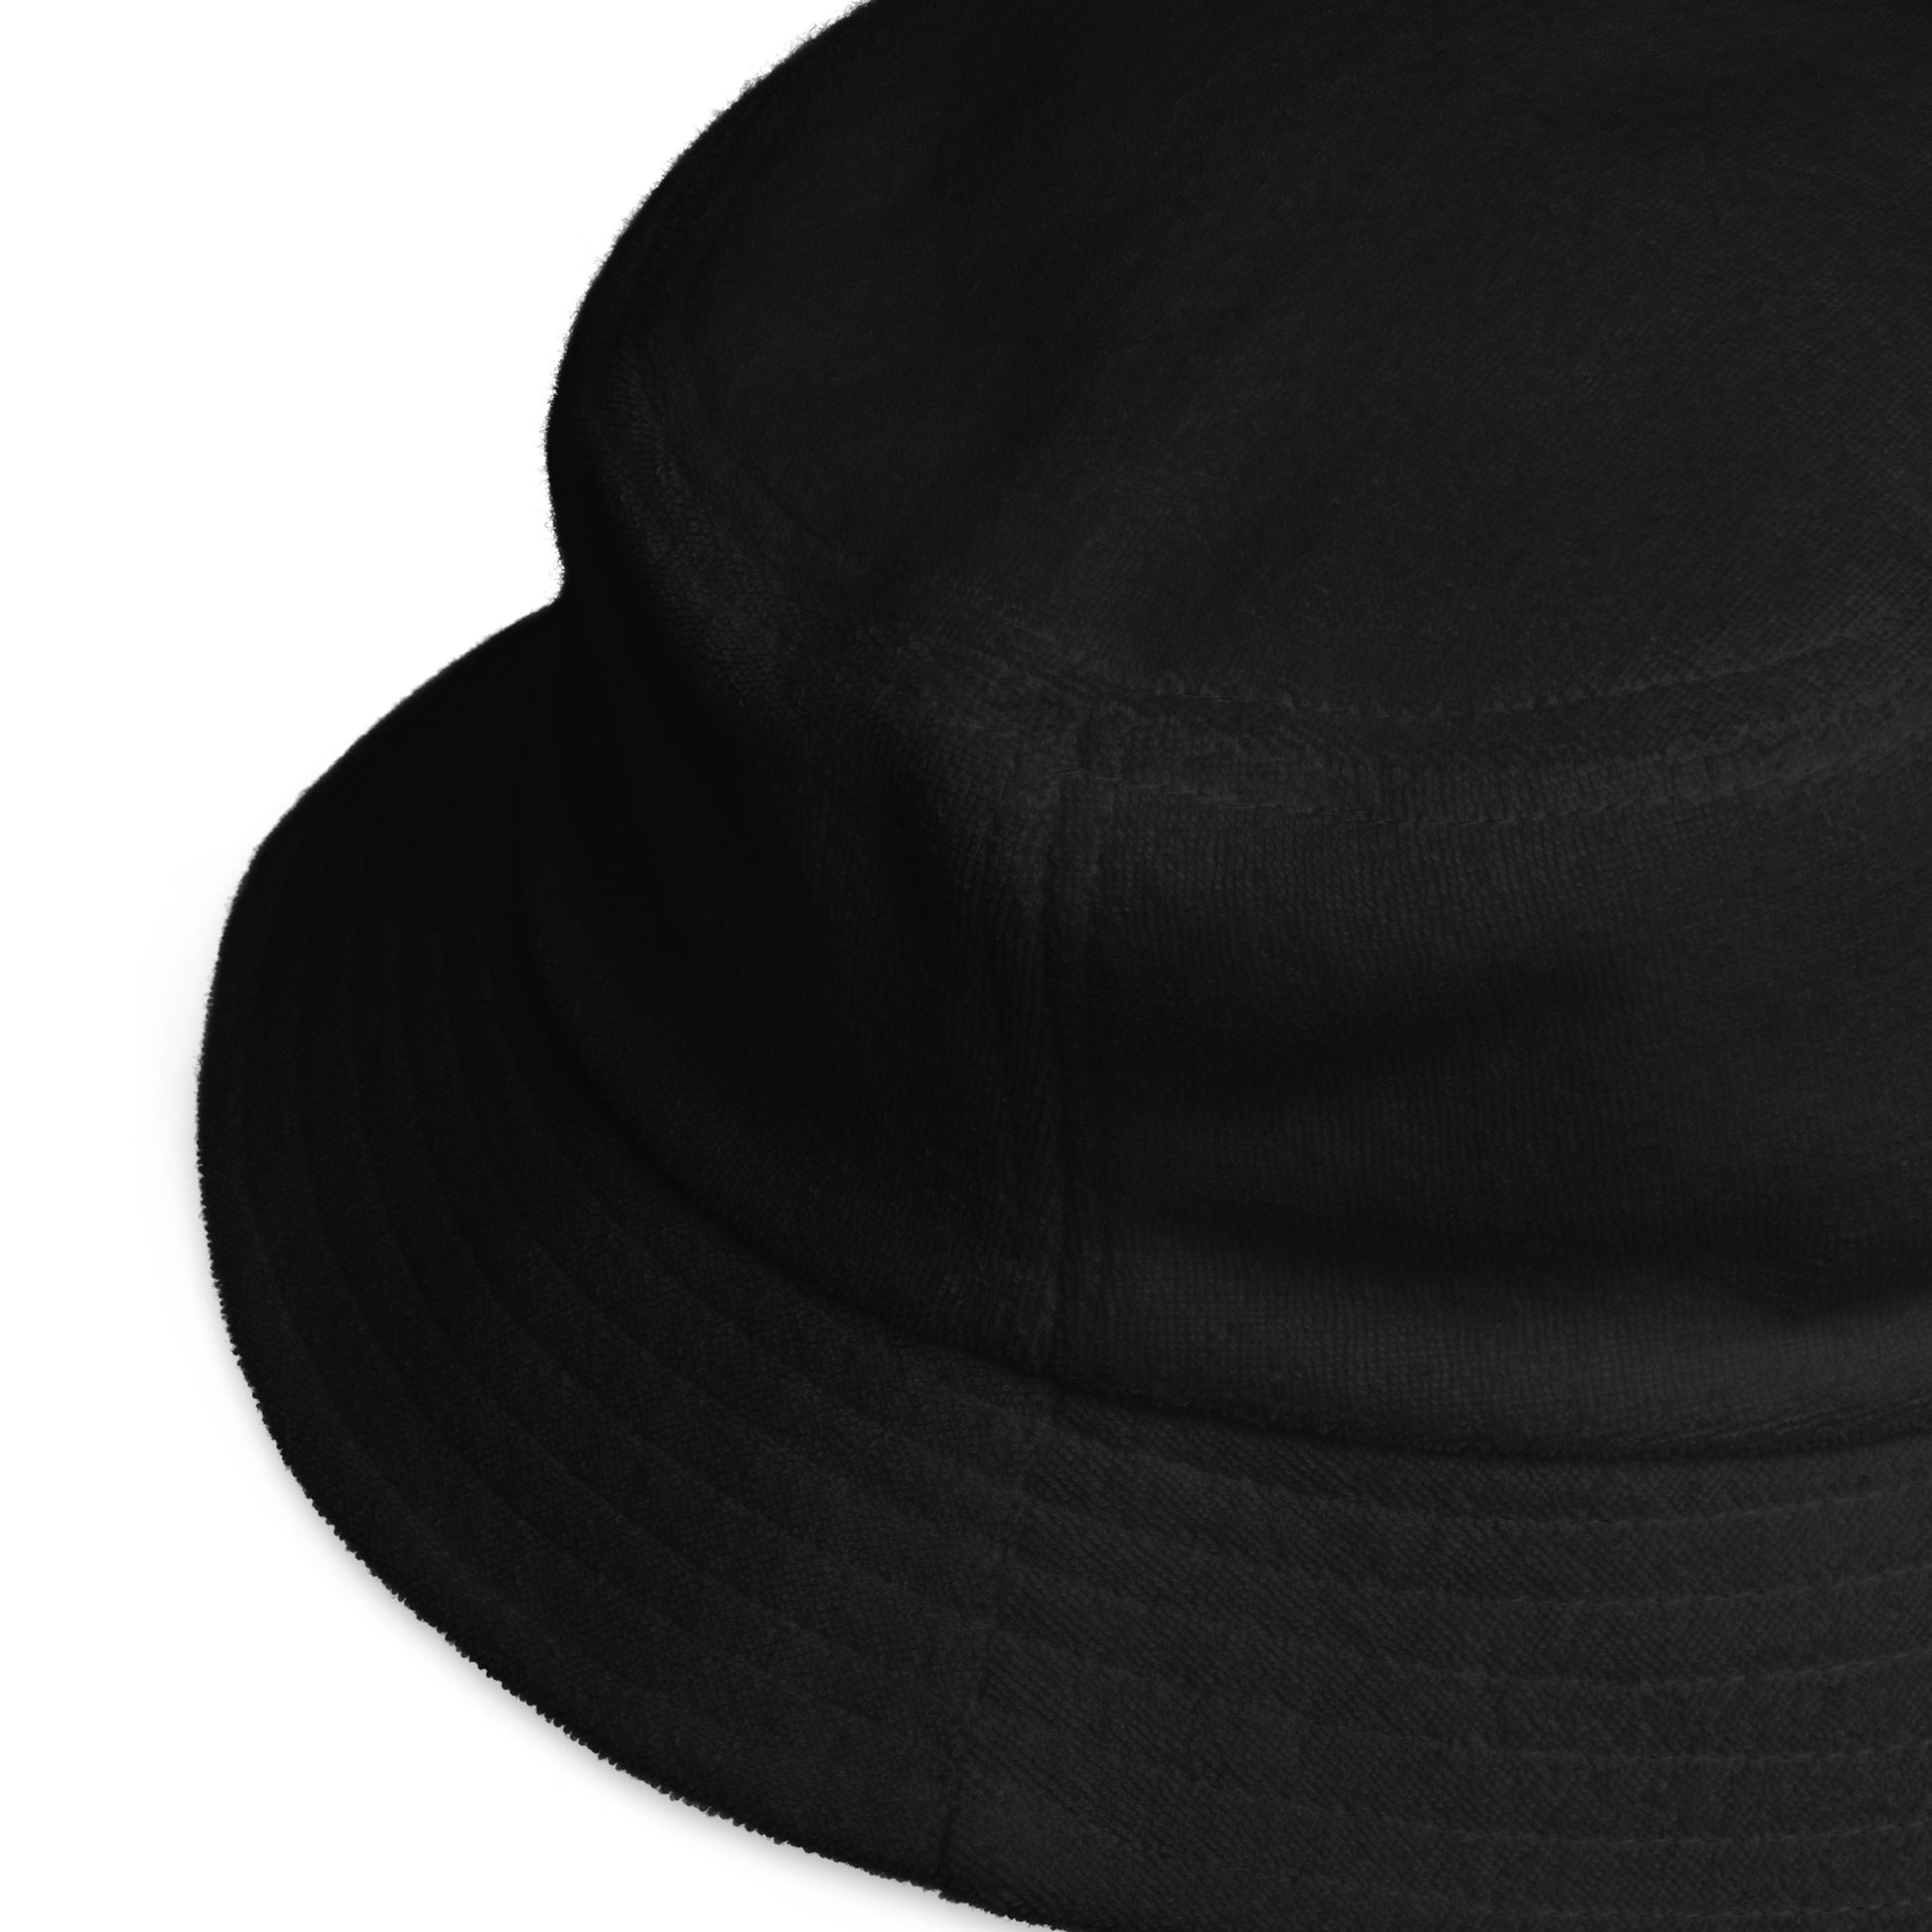 Hola Fuzzy Bucket Hat in black by Hi 👋 Happy interactions 